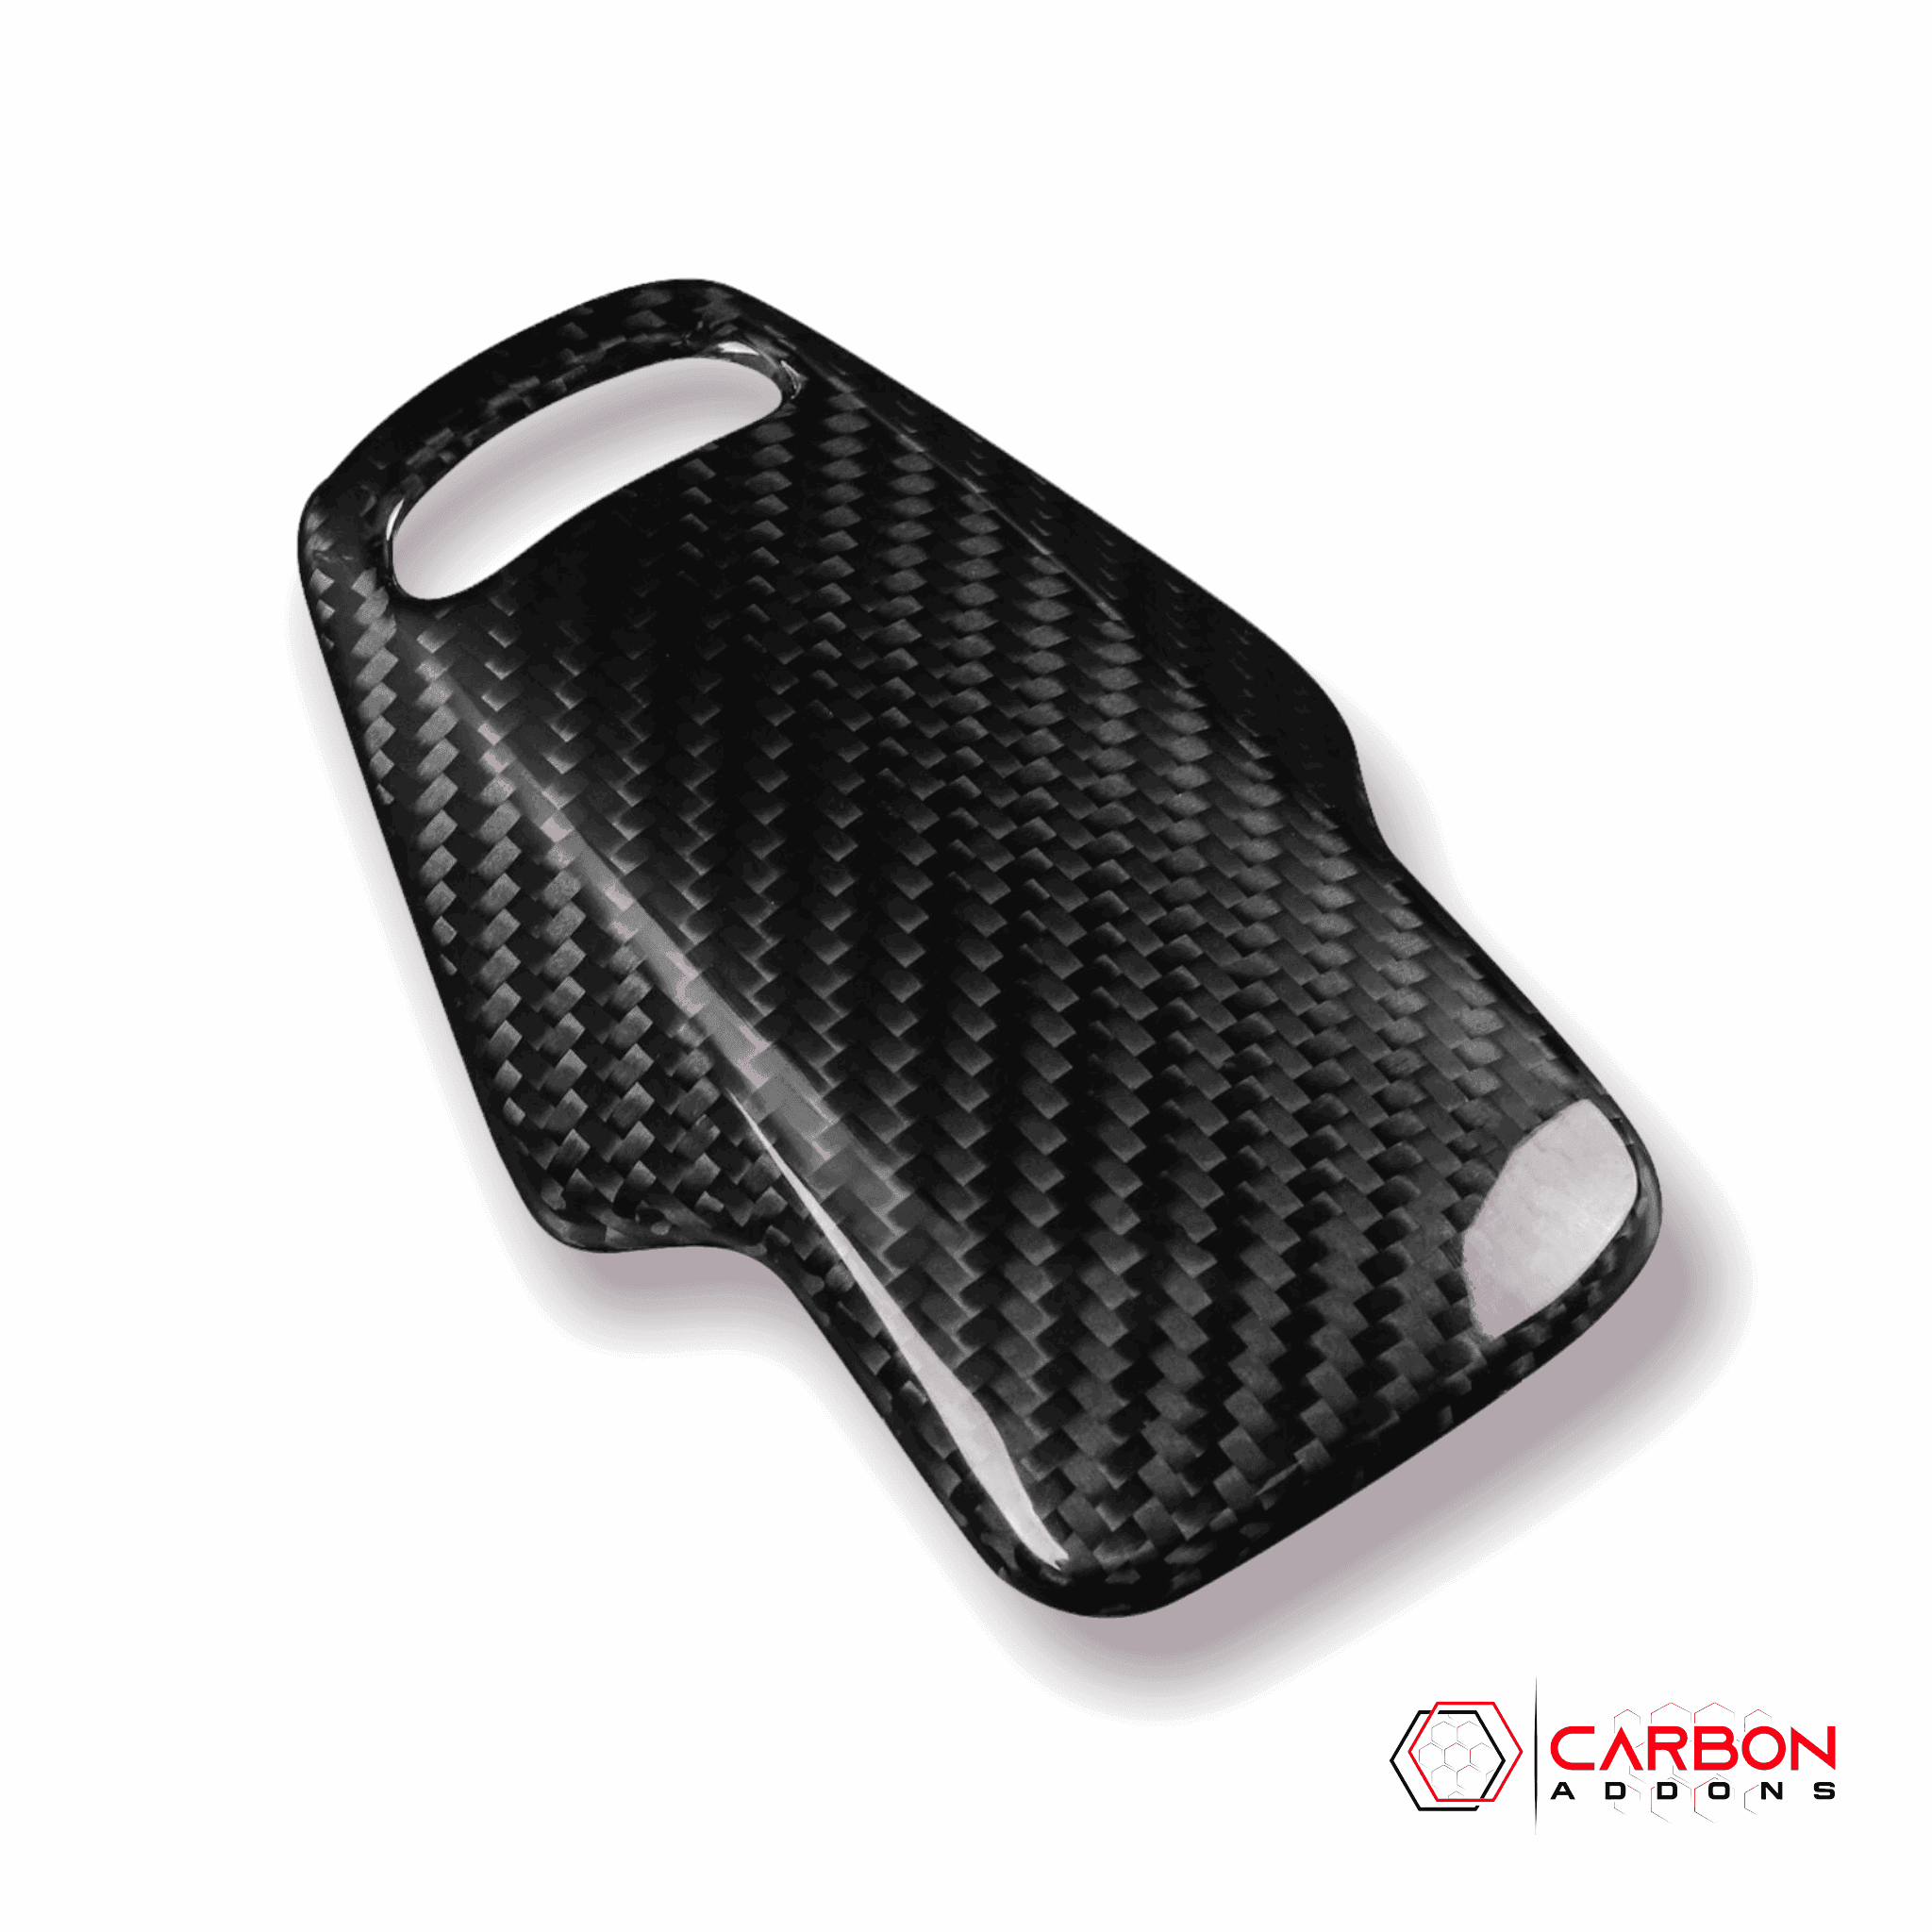 C8 CORVETTE CARBON FIBER MODE SELECT INTERIOR TRIM COVER - carbonaddons Carbon Fiber Parts, Accessories, Upgrades, Mods